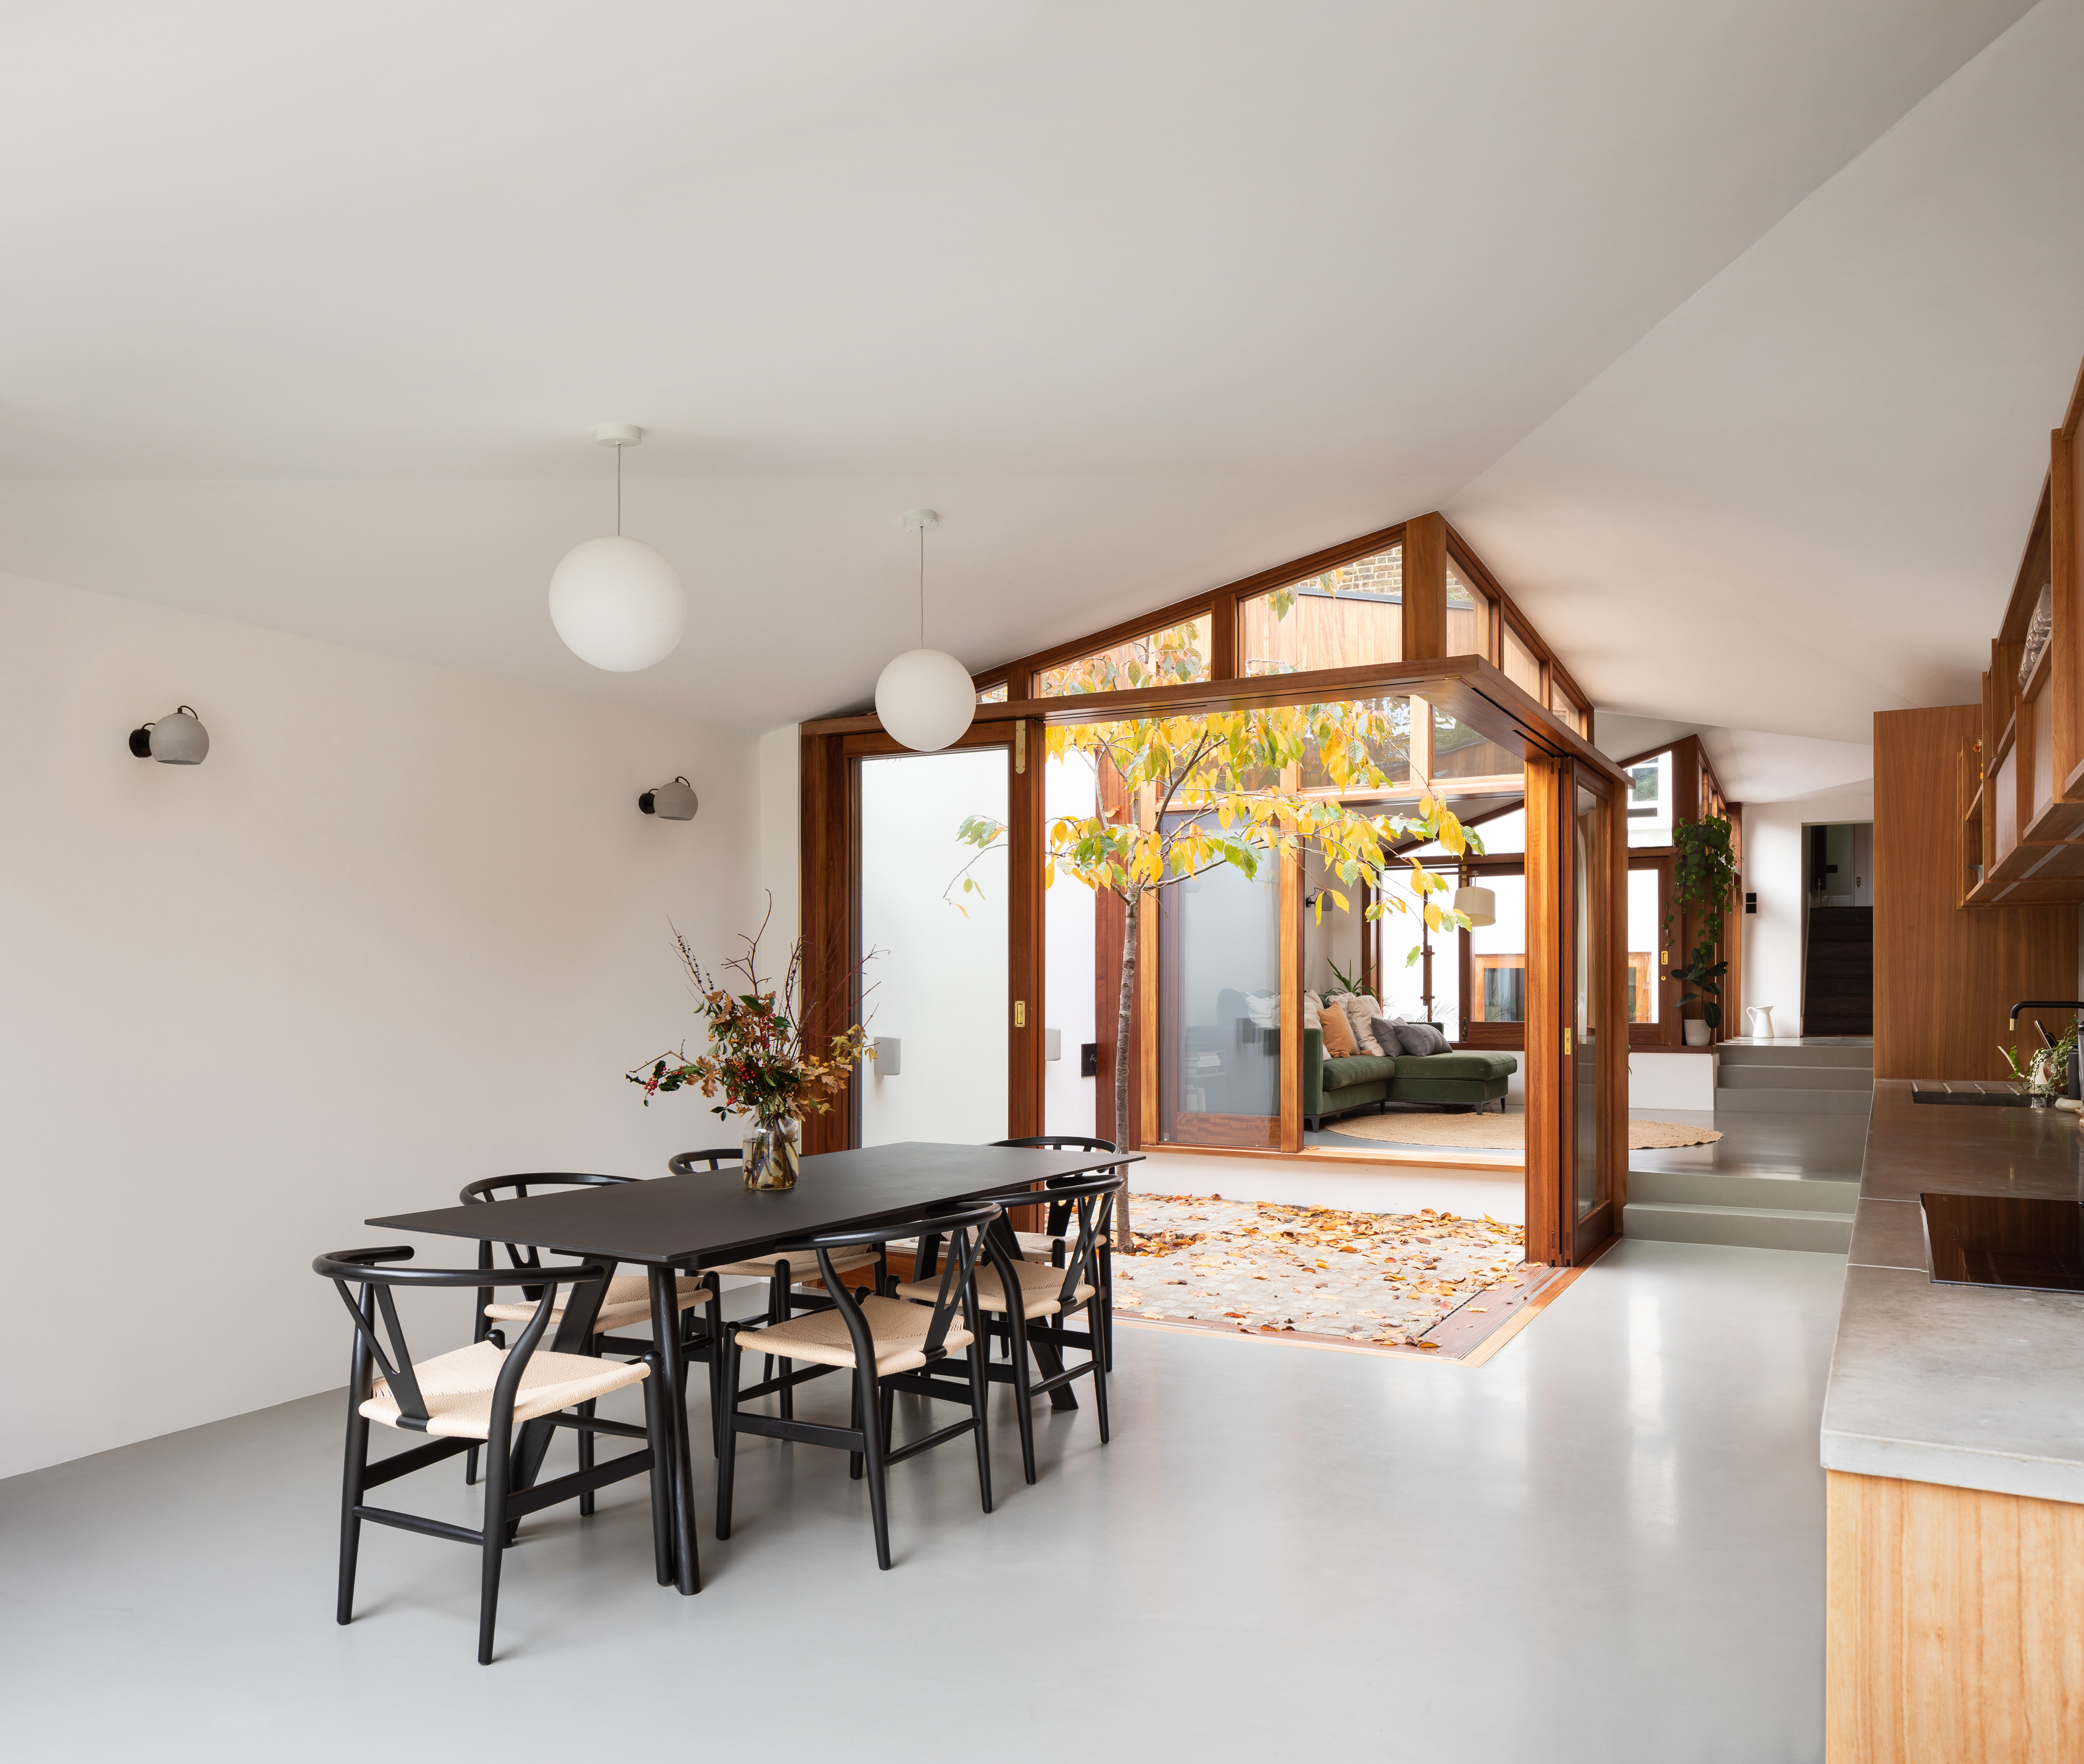 an open plan kitchen with internal courtyard gardens